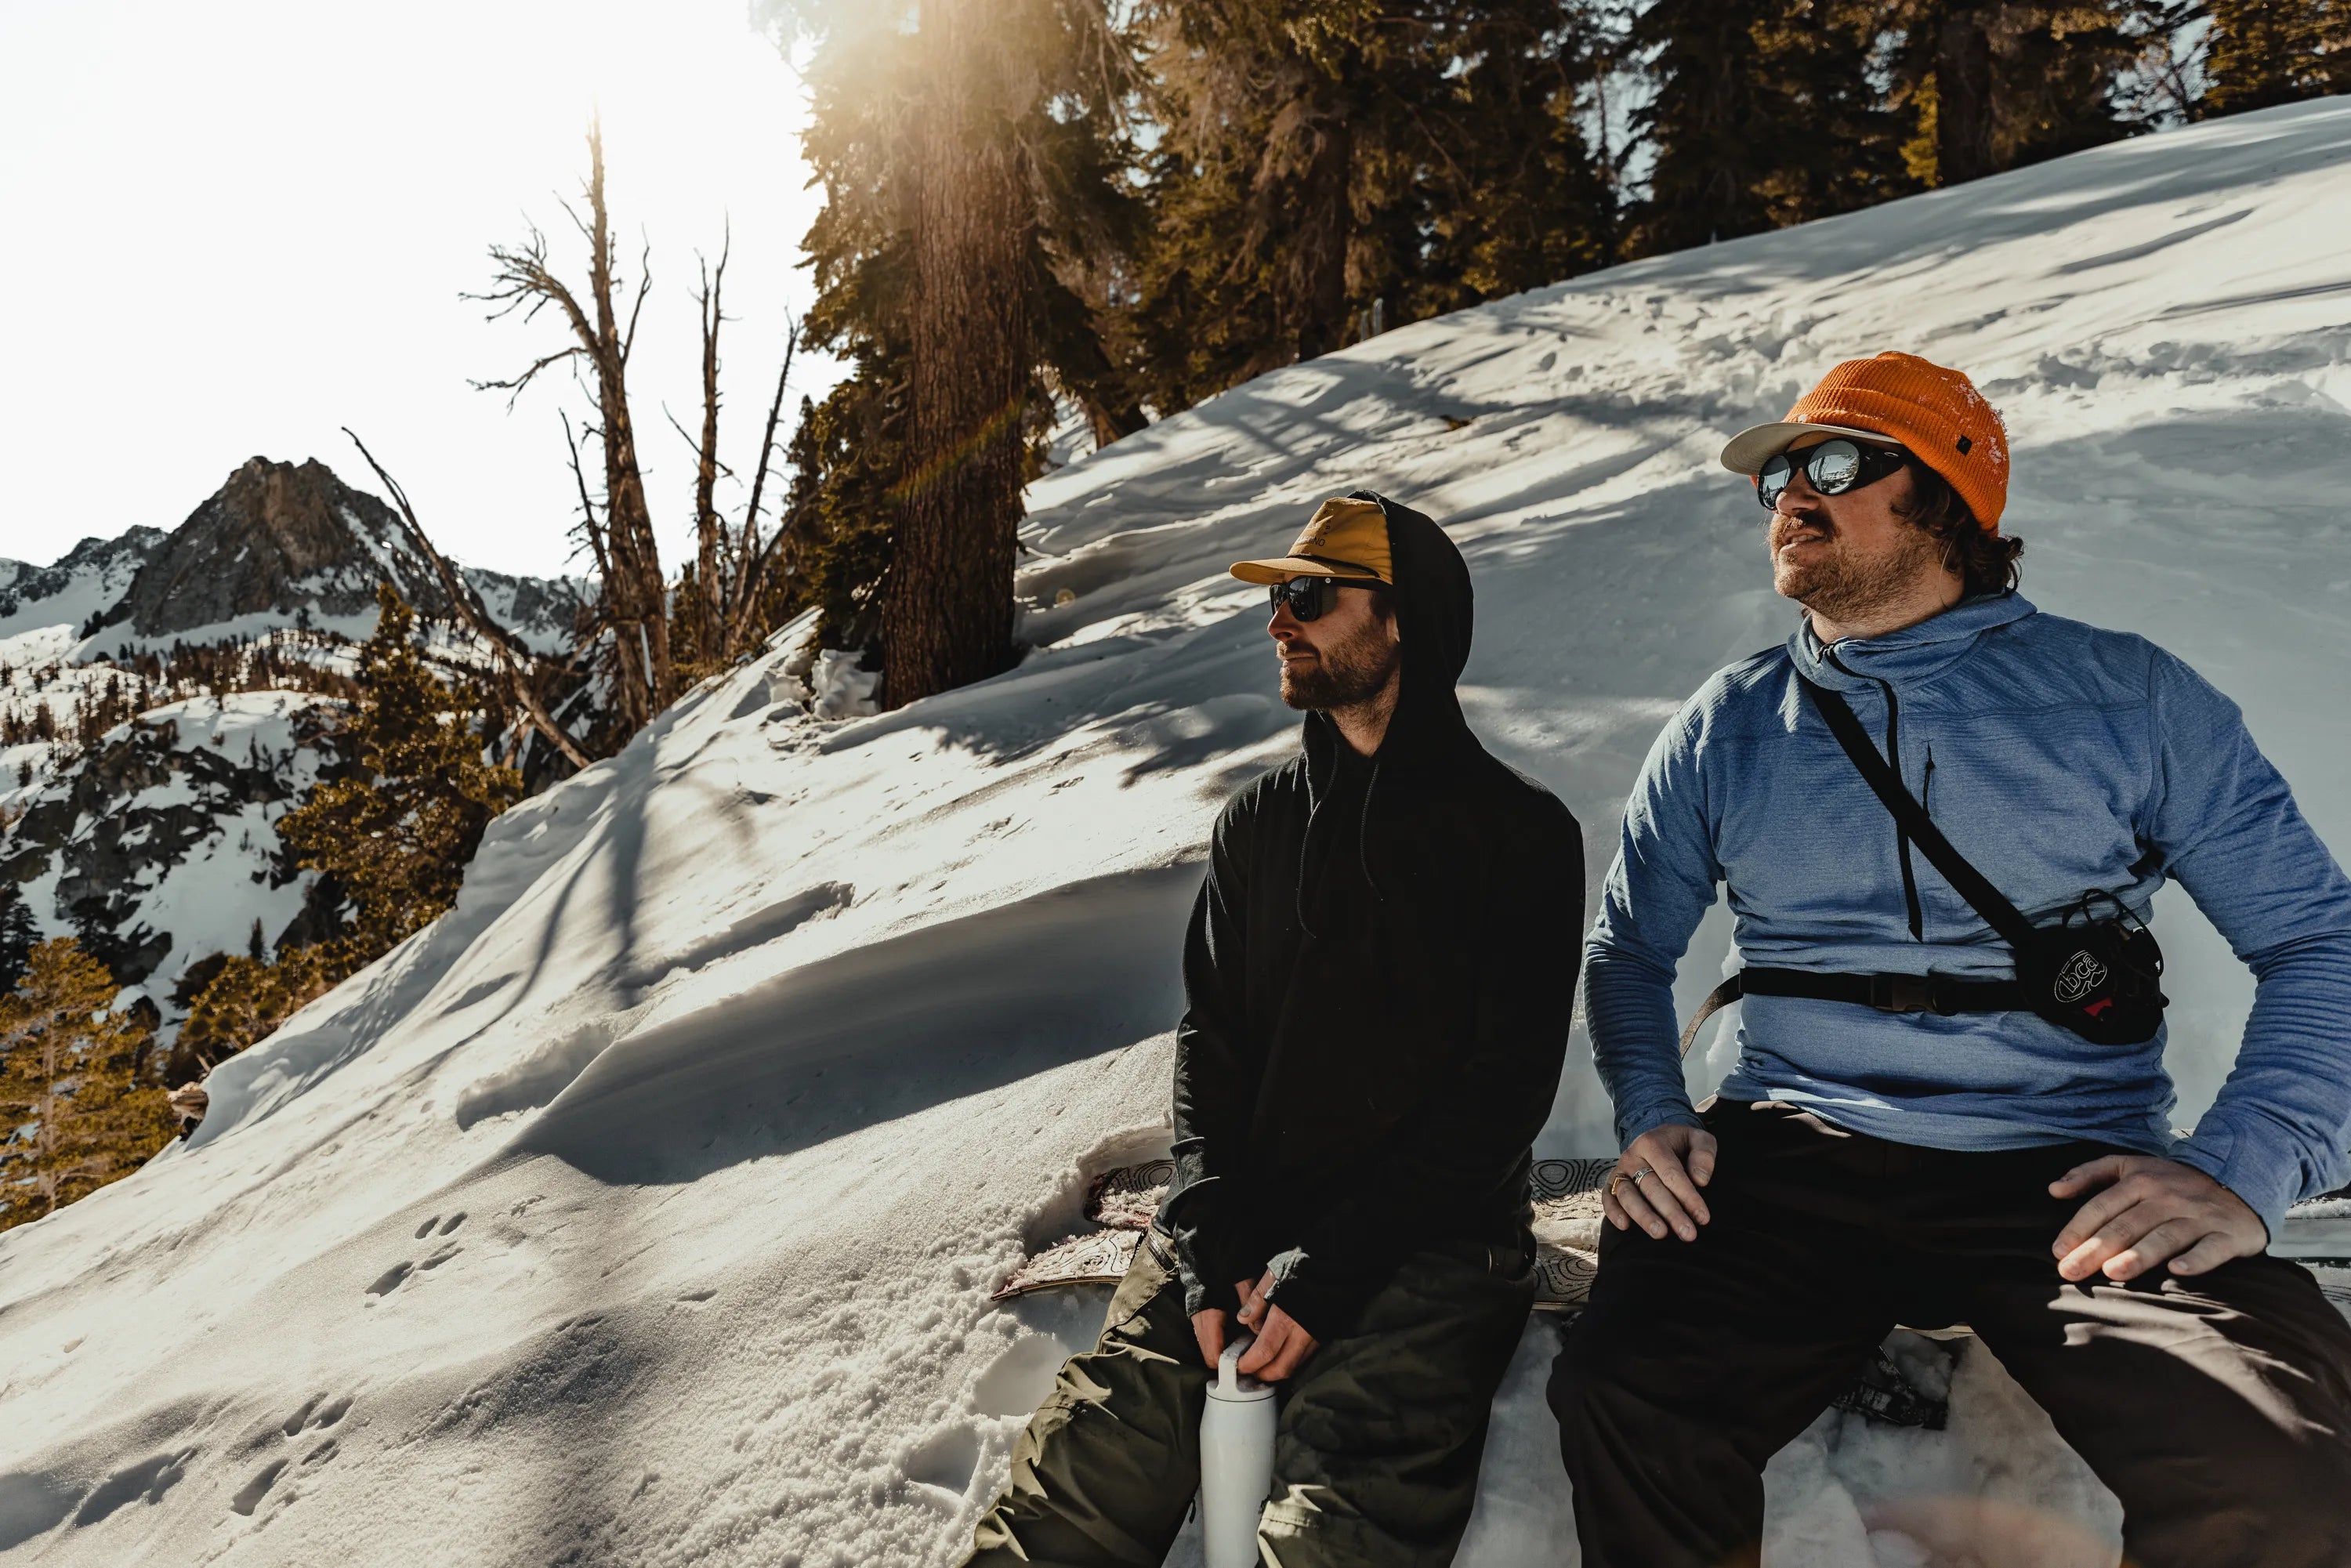 two men wearing Ridge Merino hoodies sit on a snowboard while taking a break on a splitboarding tour